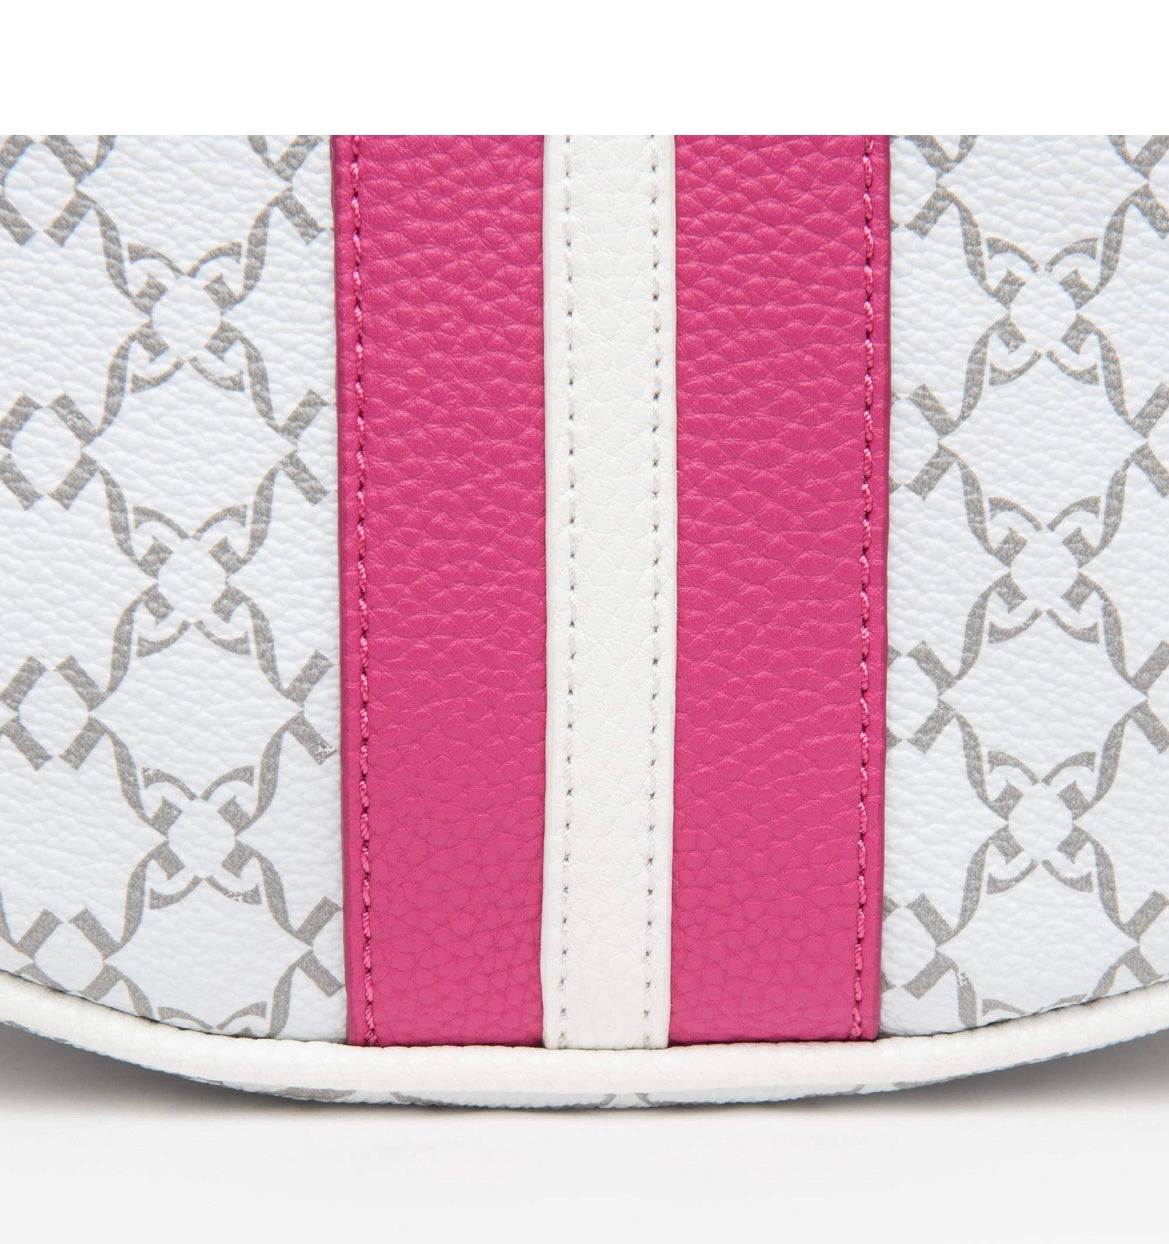 Nerogiardini white and pink leather handbag